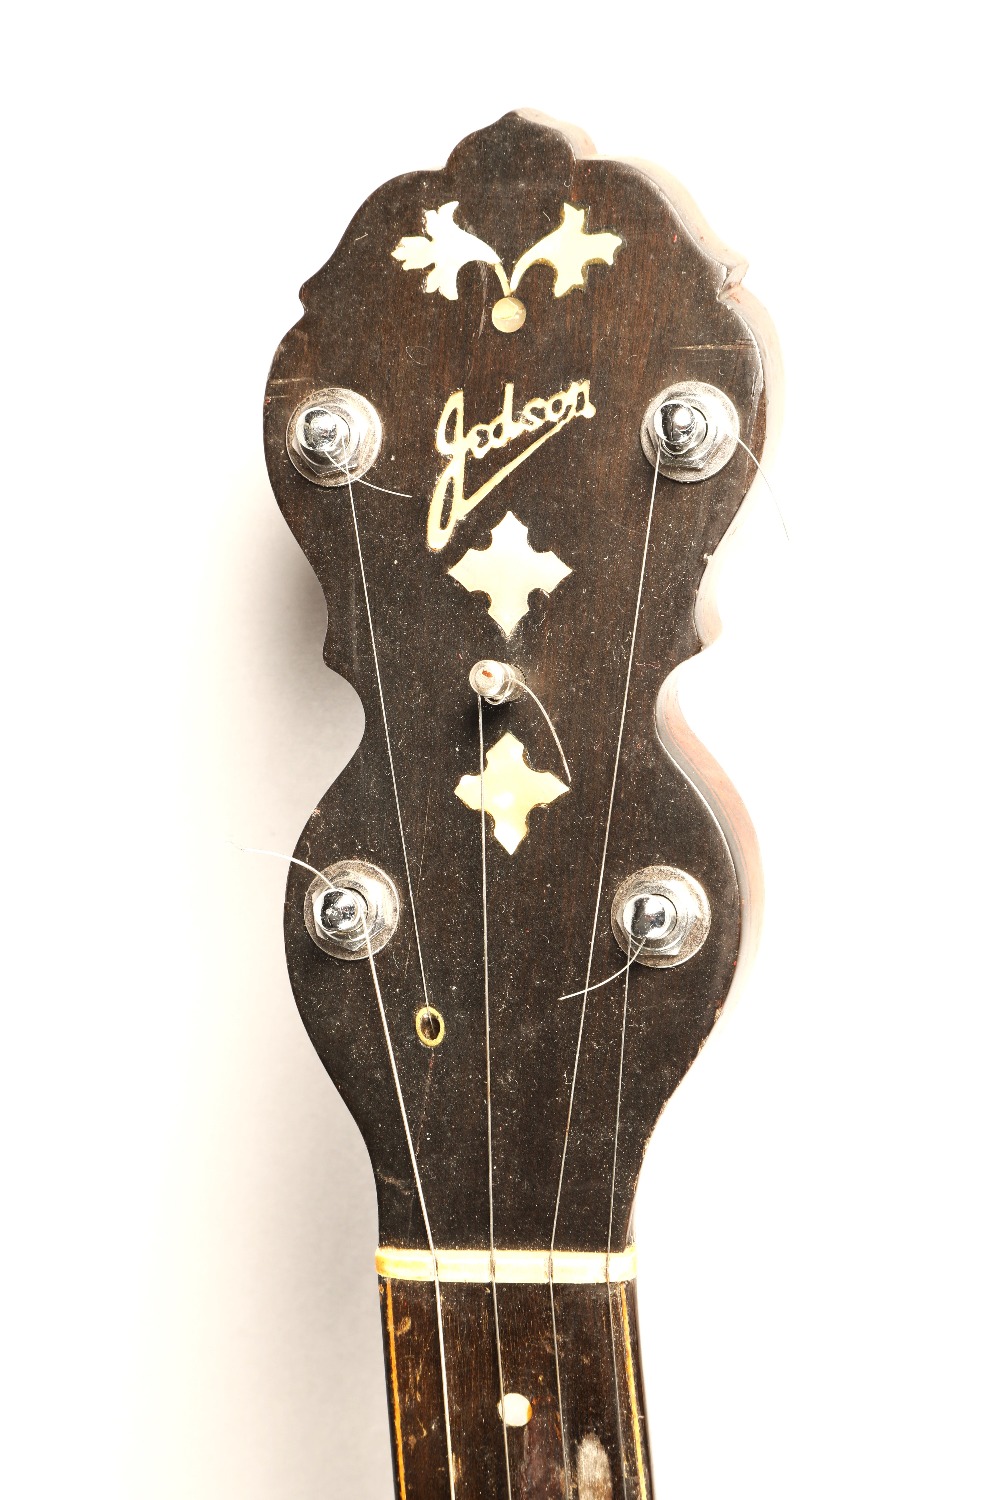 J E Dallas & Son 5-string Banjo, 22 nickel frets to body, Jedson on the headstock, Birds eye maple - Image 6 of 7